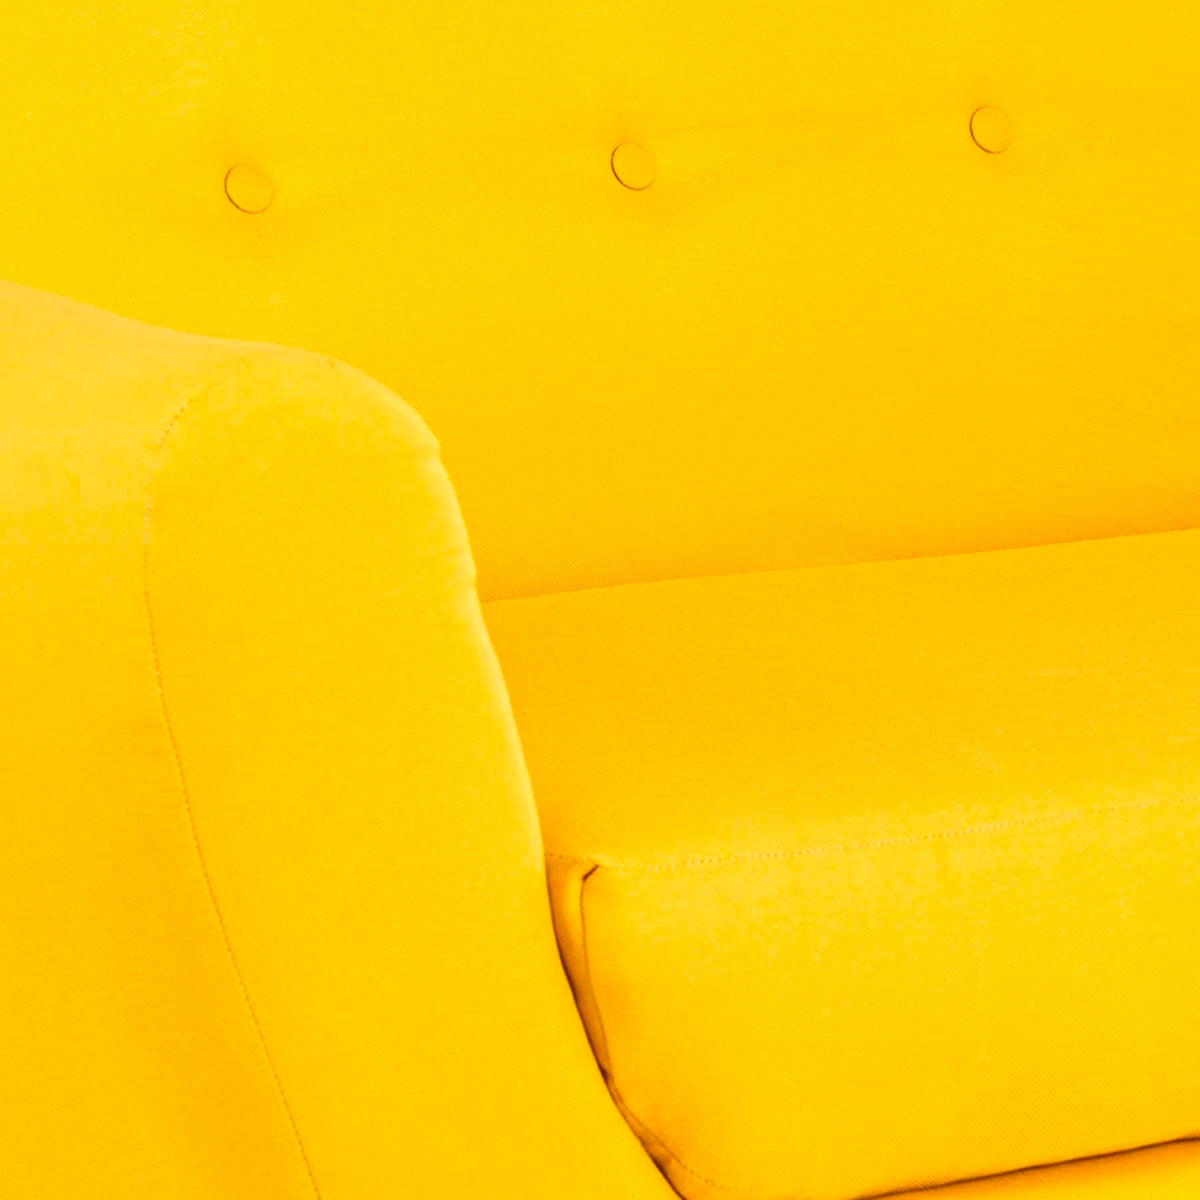 Sofá de 3 plazas amarillo - Tu Gow